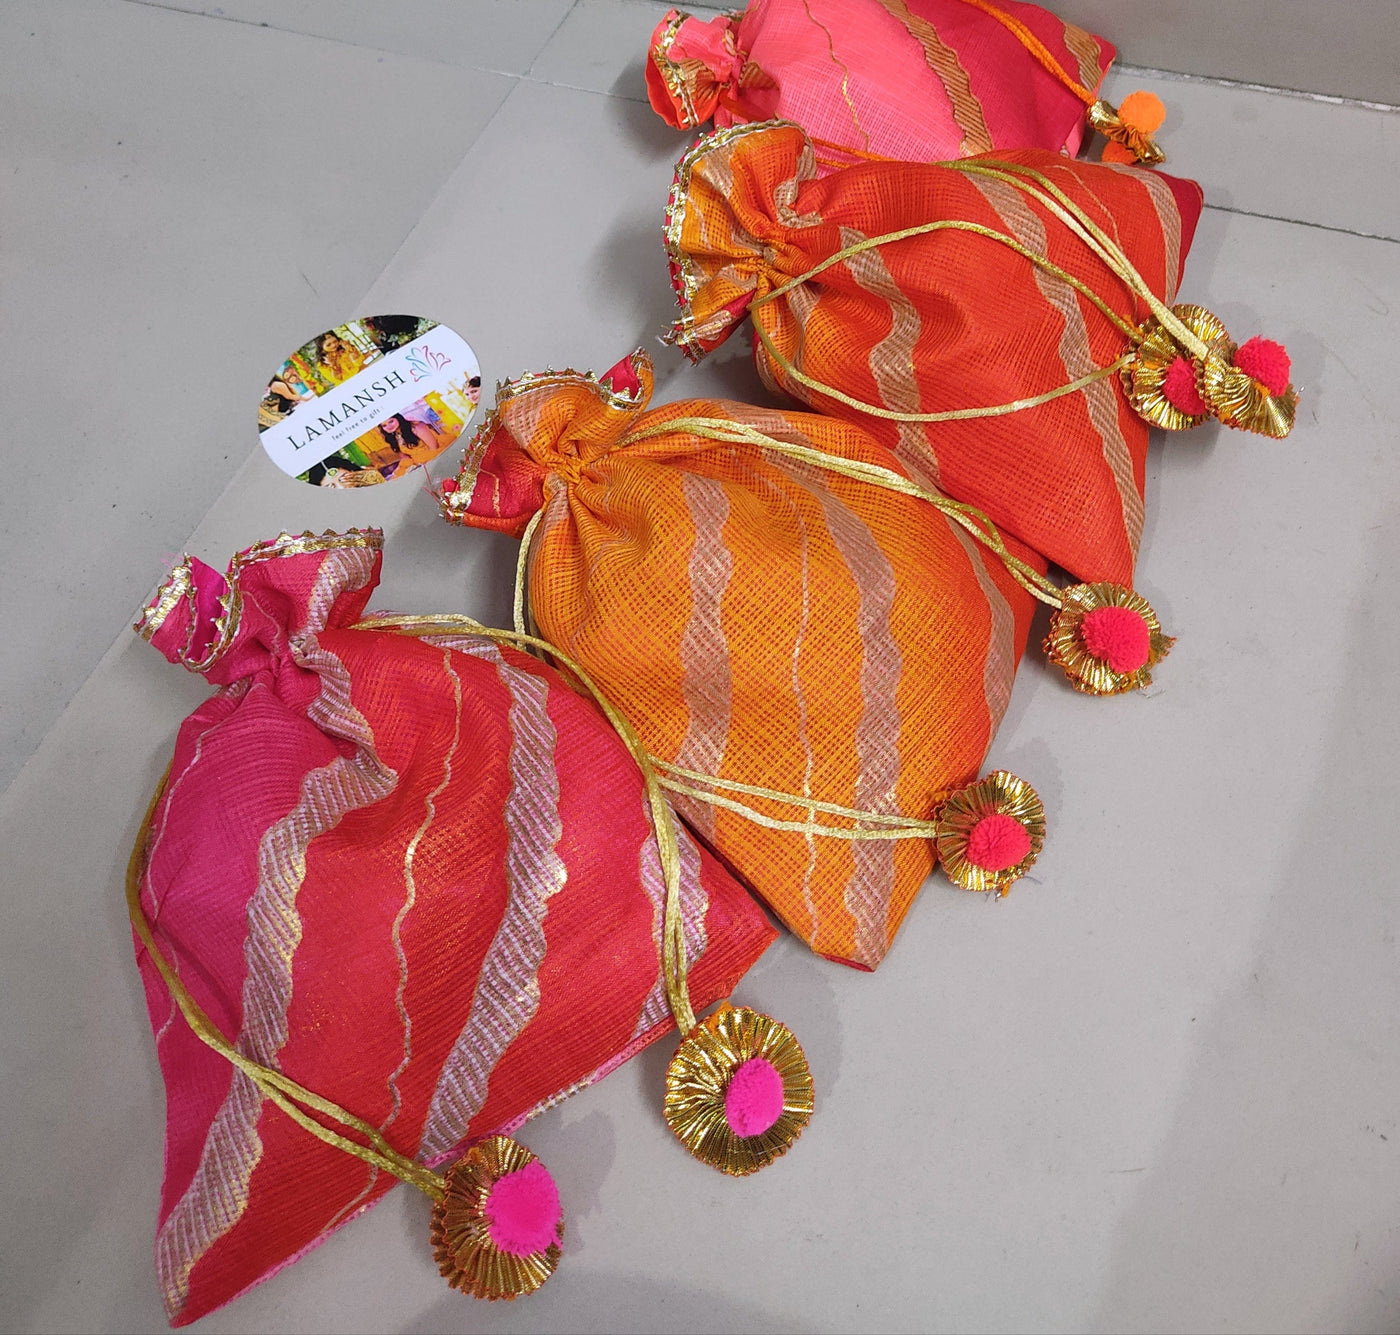 LAMANSH ® Women's Potli Bag LAMANSH® 7*9 inch Gota Zari work Designer Printed Potli bags for Giveaways 🎁 & Favours / Shagun Pouch Return Gifts for Haldi mehendi roka wedding